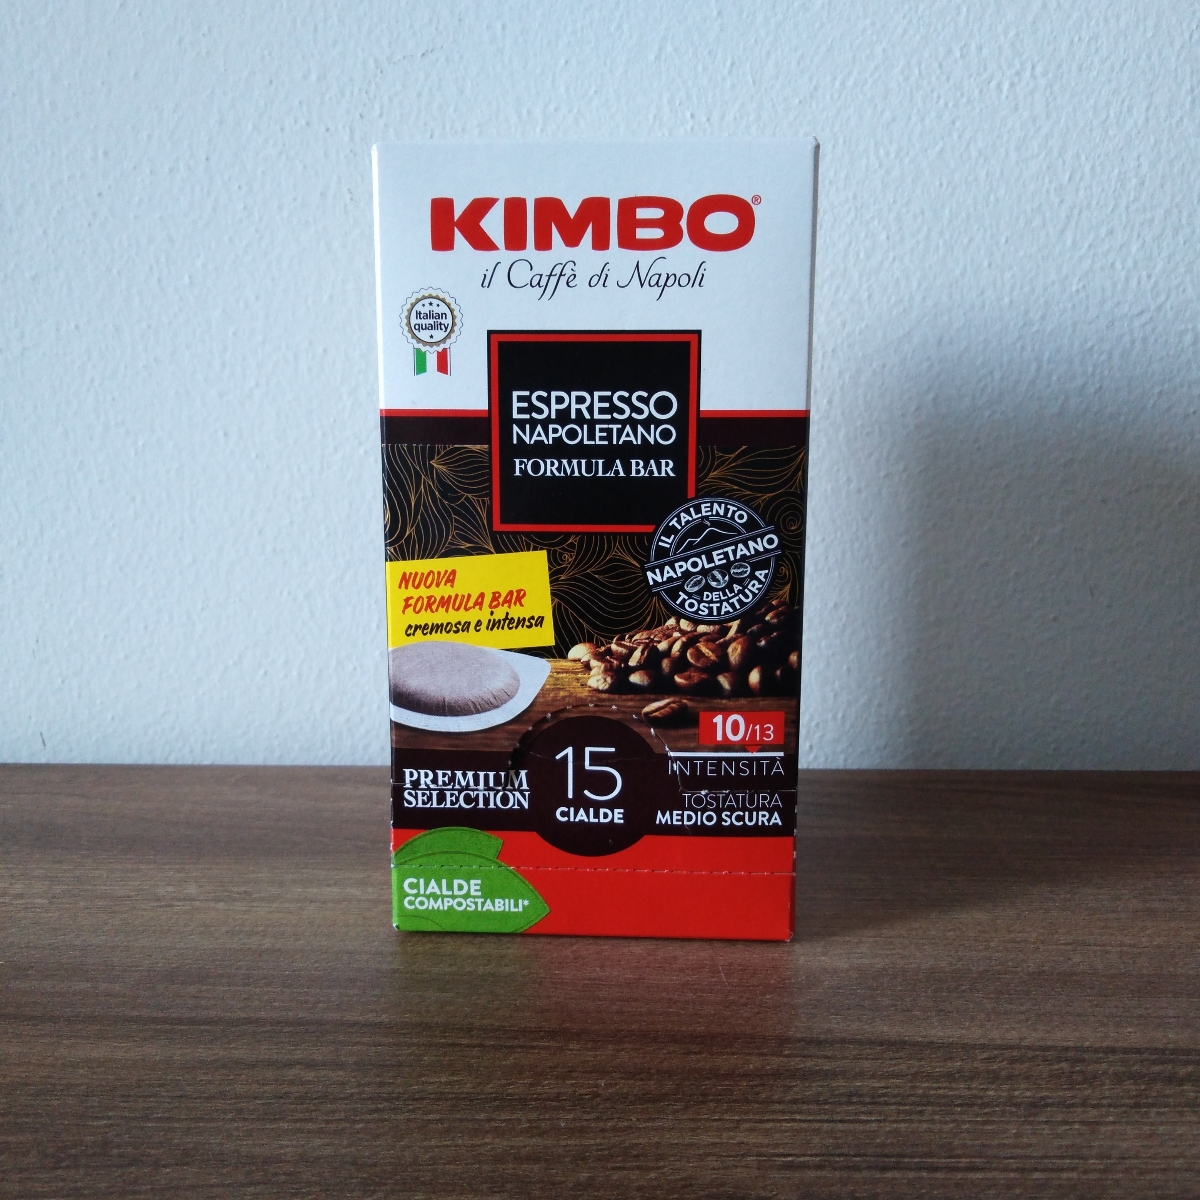 Kimbo Cialda Espresso Napoletano - Formula Bar Review